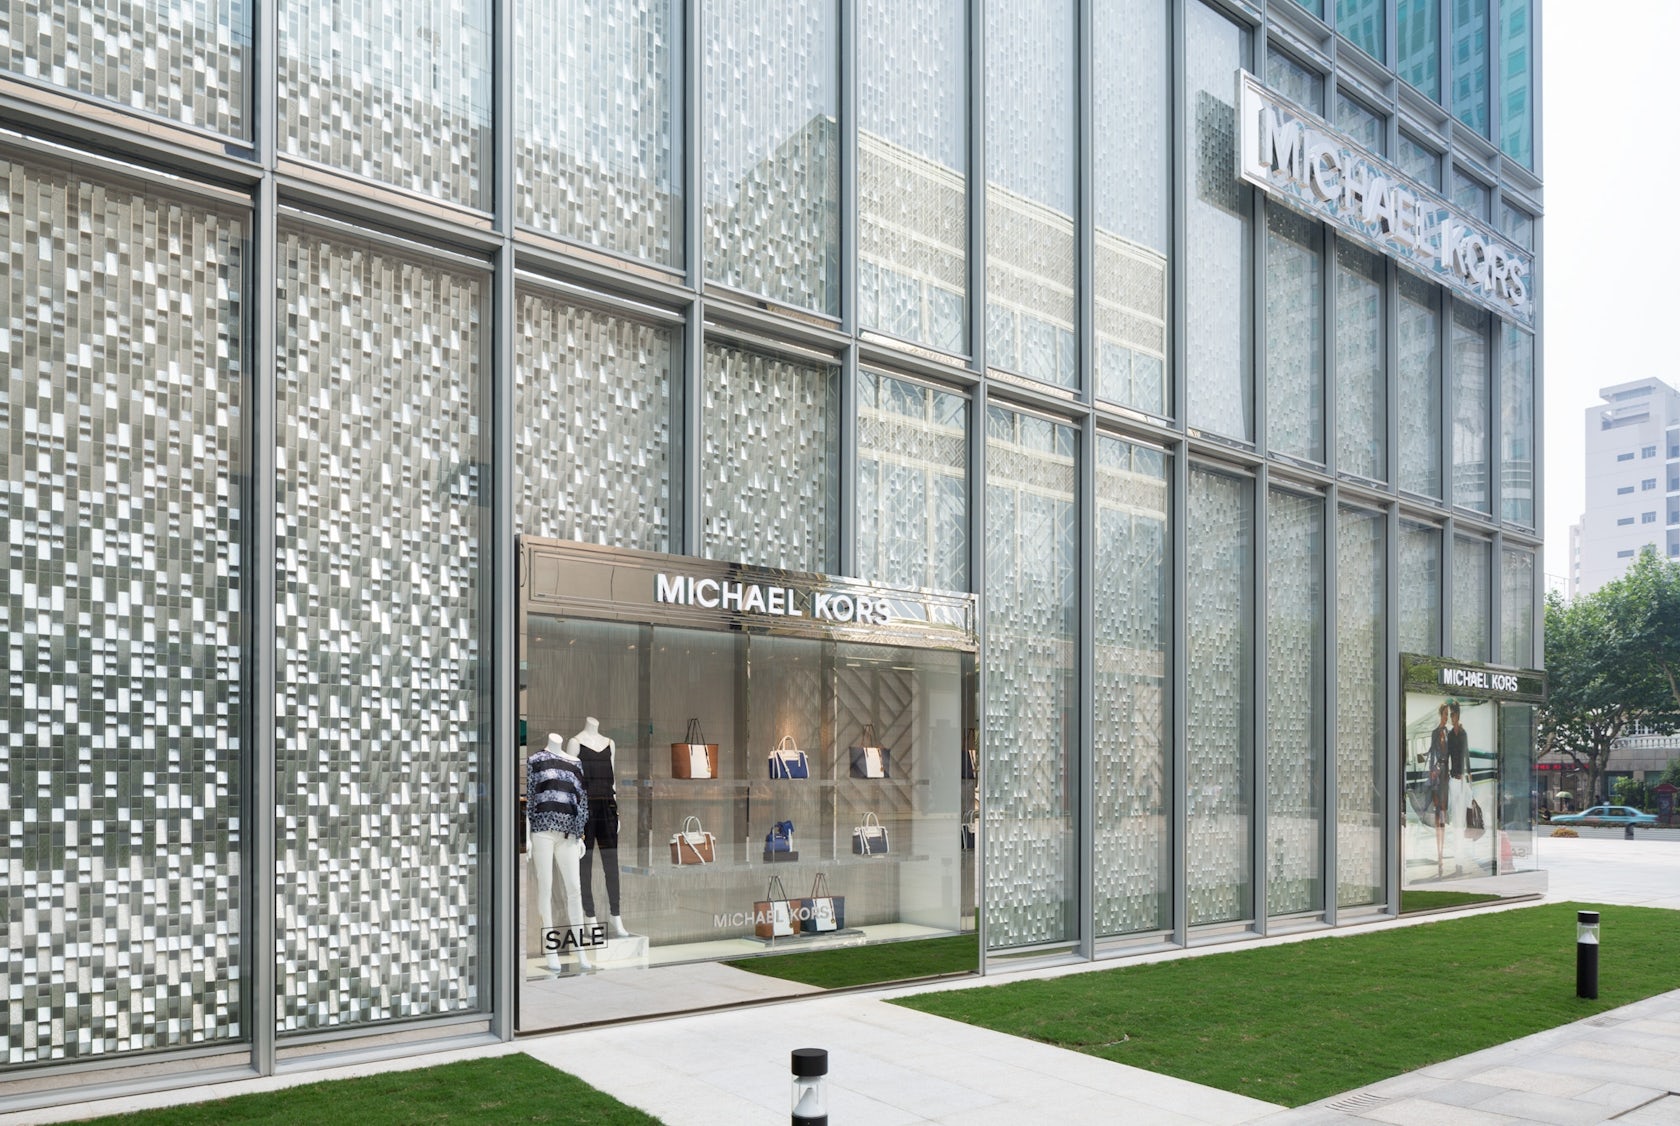 Michael Kors Jing An Store by Kohn Pedersen Fox Associates - Architizer